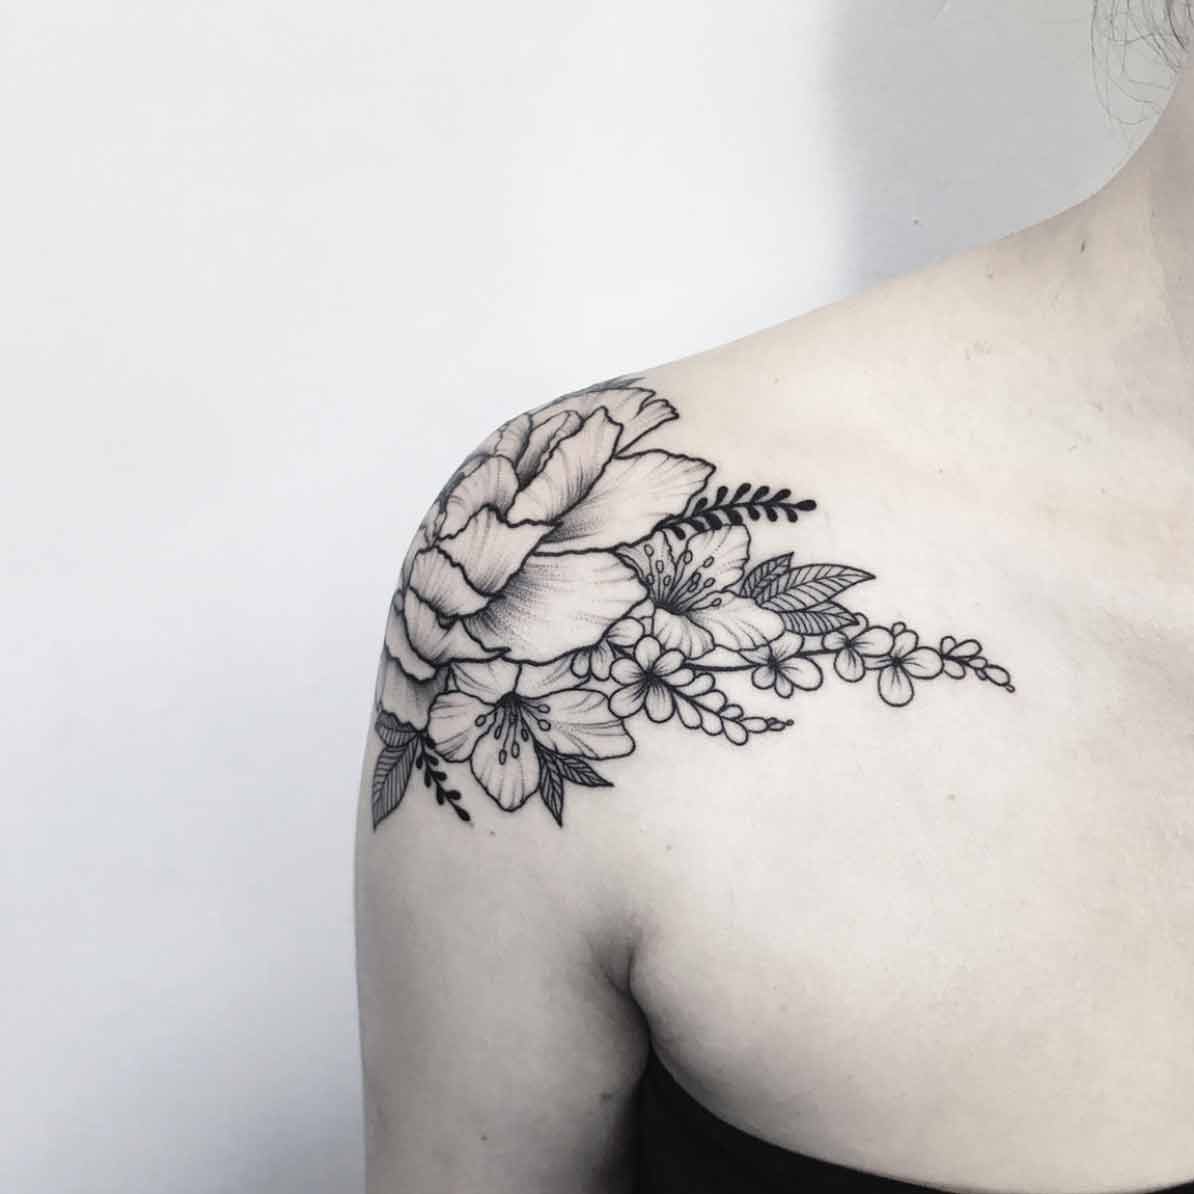 Tatuaje blanco y negro con maquina de tatuaje LACEnano.